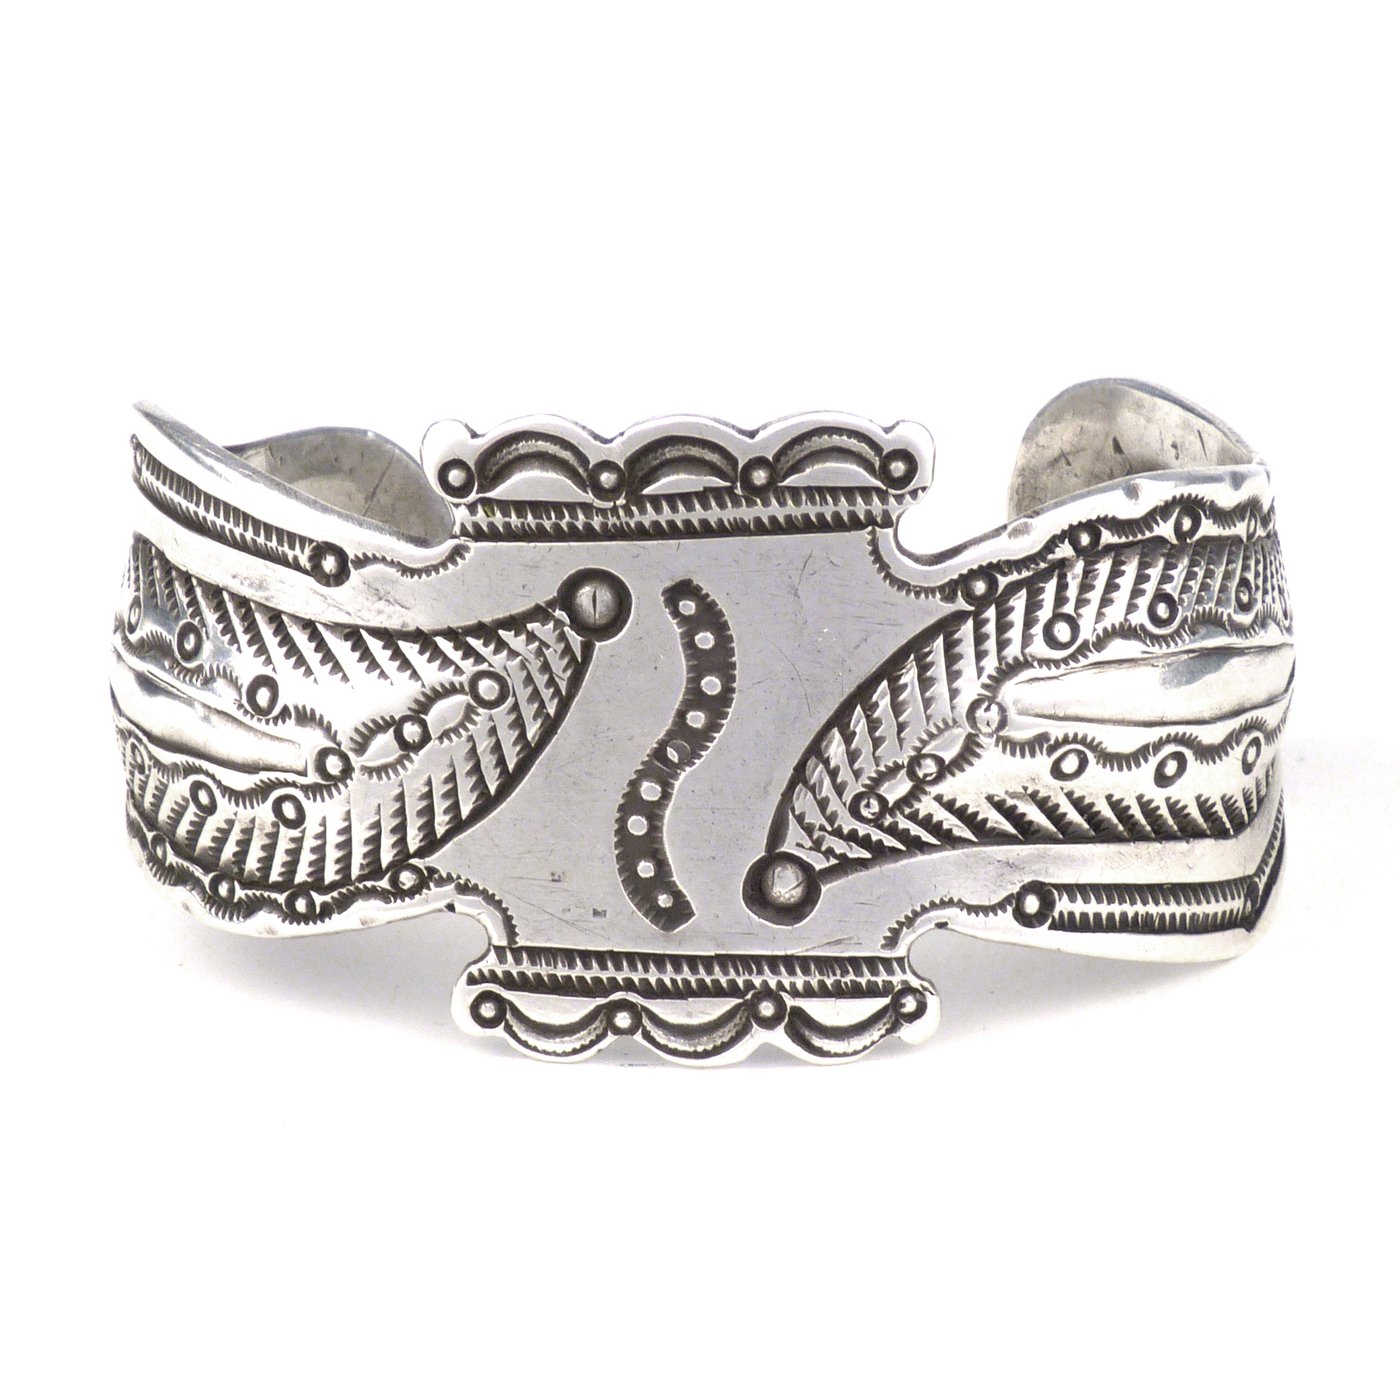 Navajo Stamped Silver Bracelet with Repousse, c.1920 | Shiprock Santa Fe